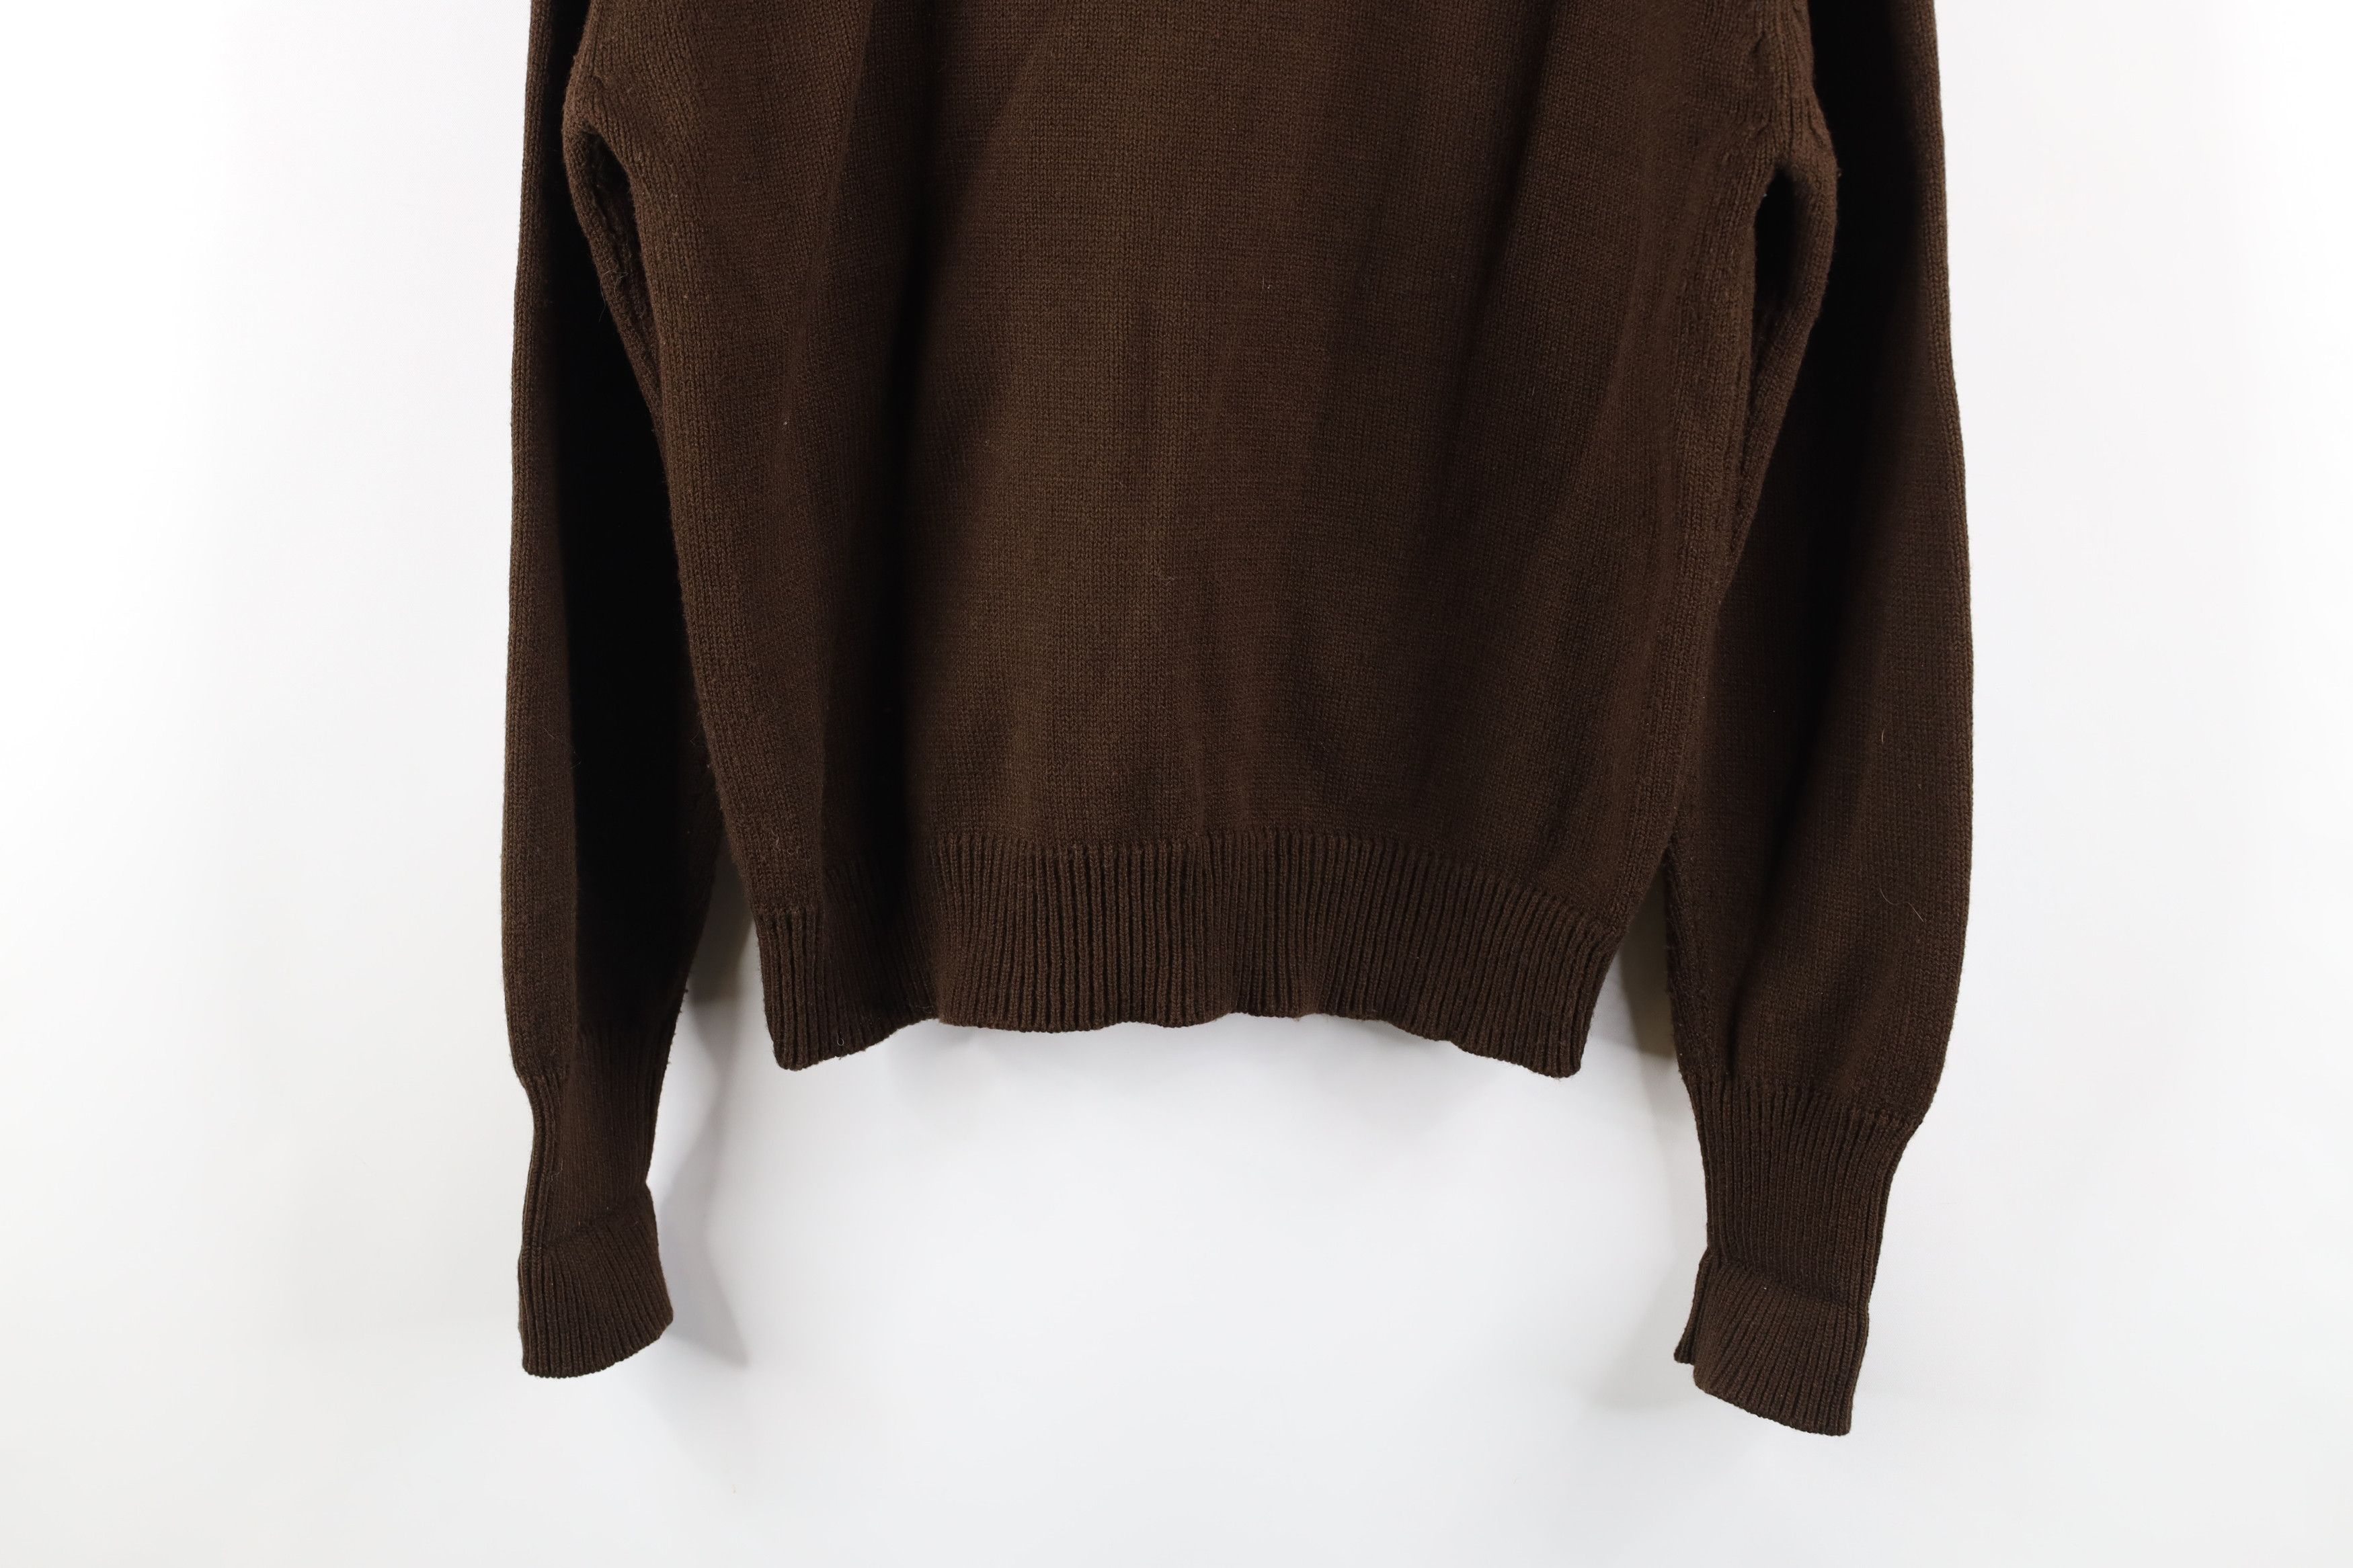 Vintage Vintage 70s Streetwear Blank Knit V-Neck Sweater Brown Size M / US 6-8 / IT 42-44 - 7 Preview